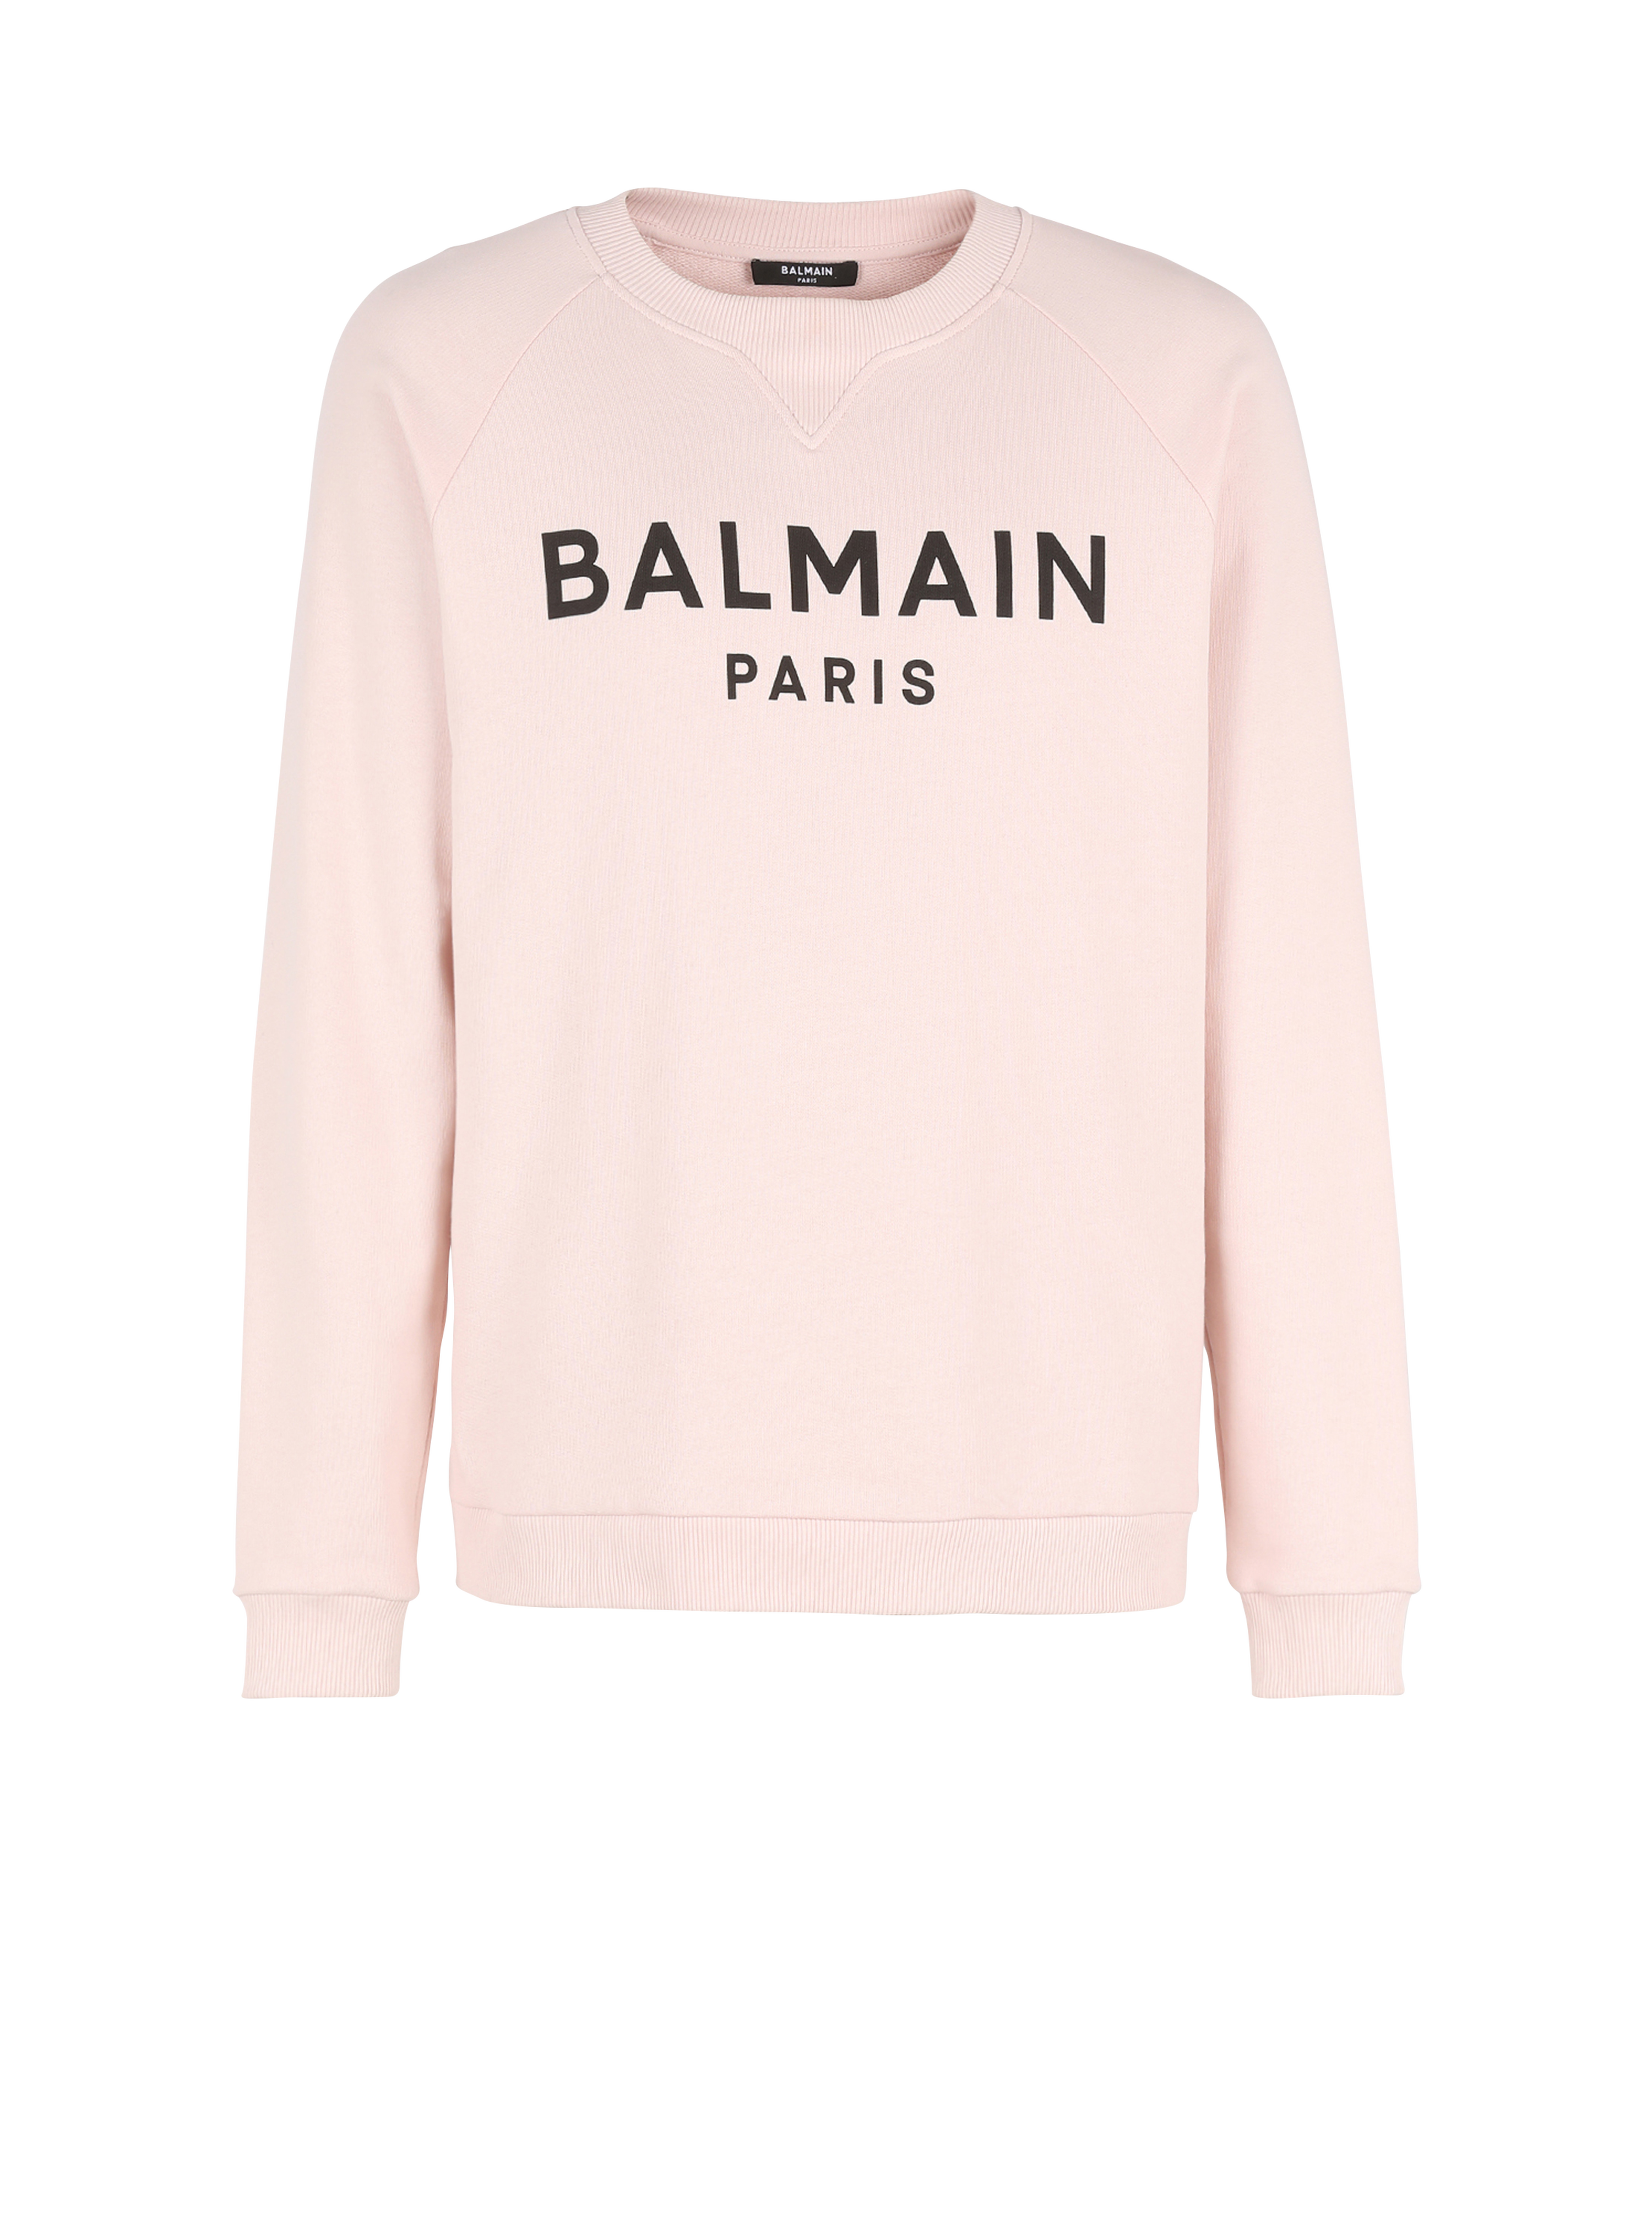 Eco-designed cotton sweatshirt with Balmain Paris metallic logo print, pink